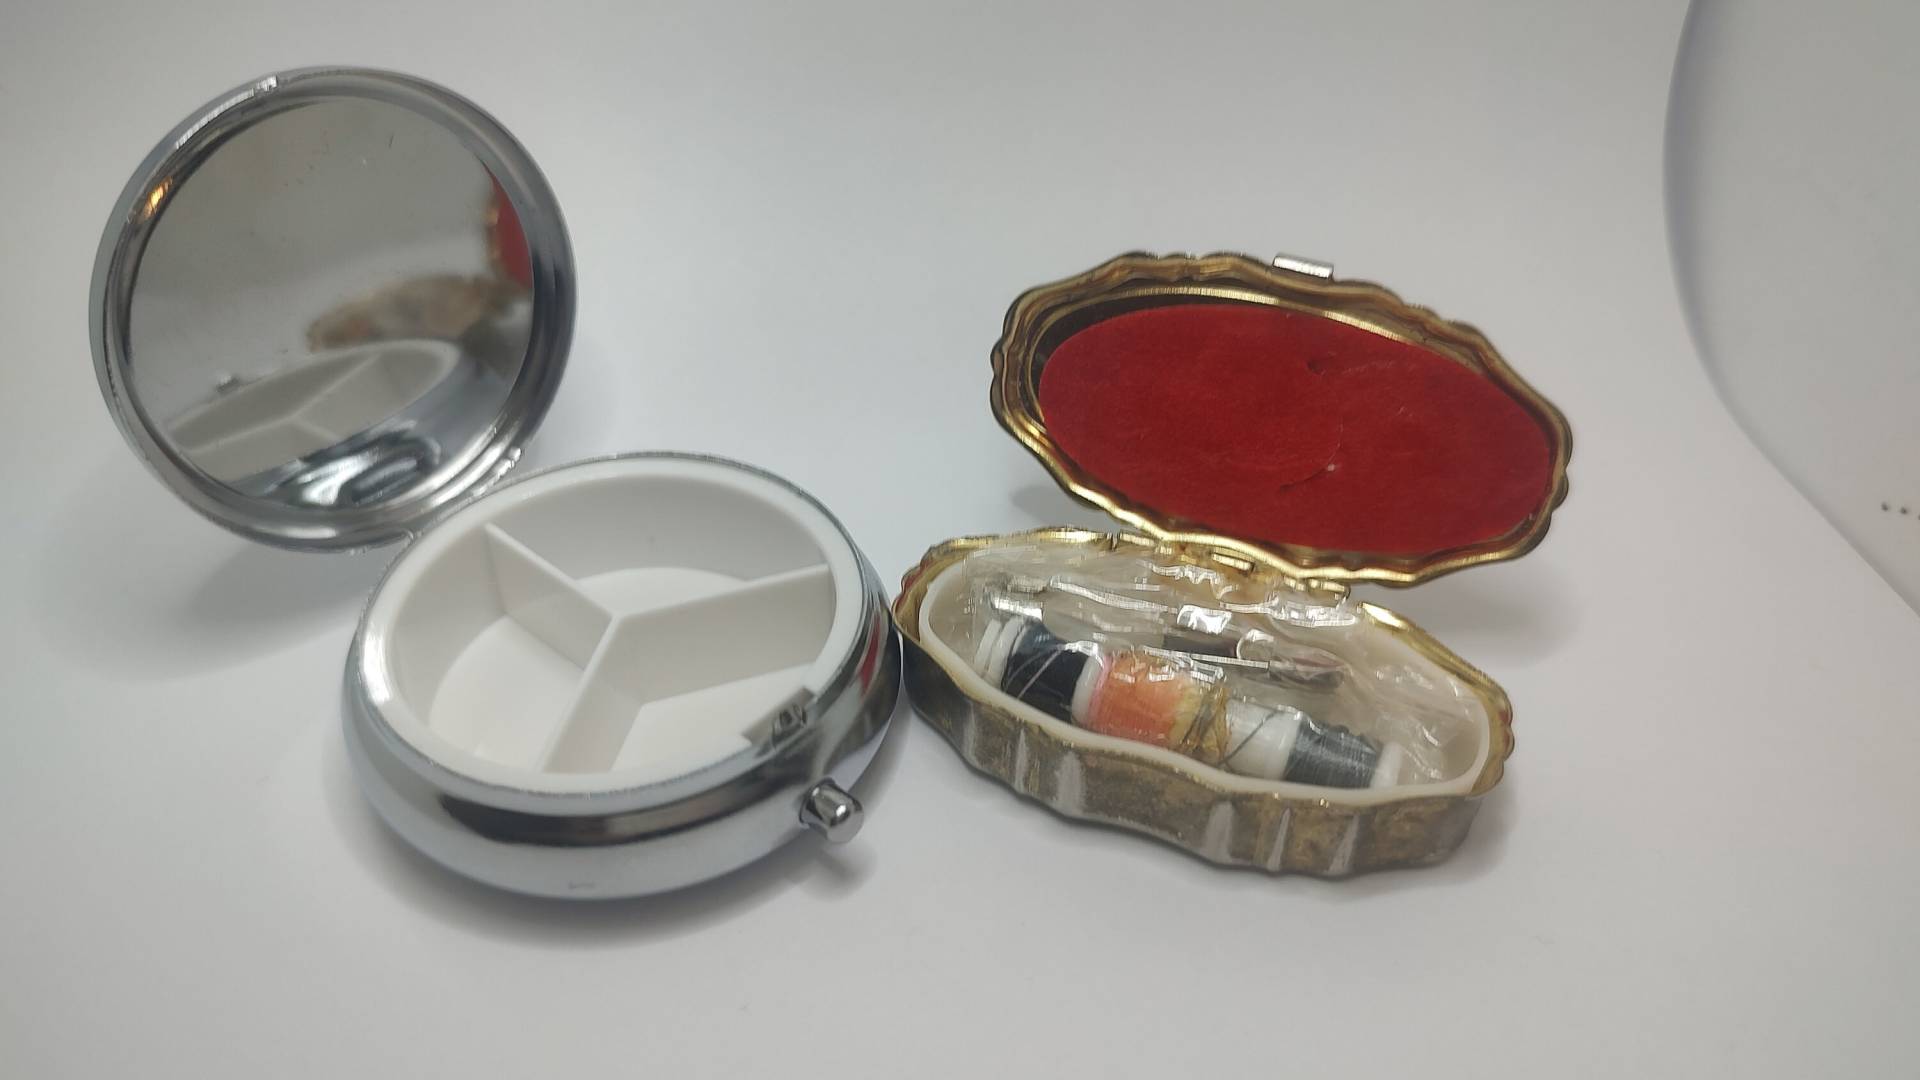 2 Vintage Pillendosen, Nähkästchen, Metalldose von UniqueArtGiftStore